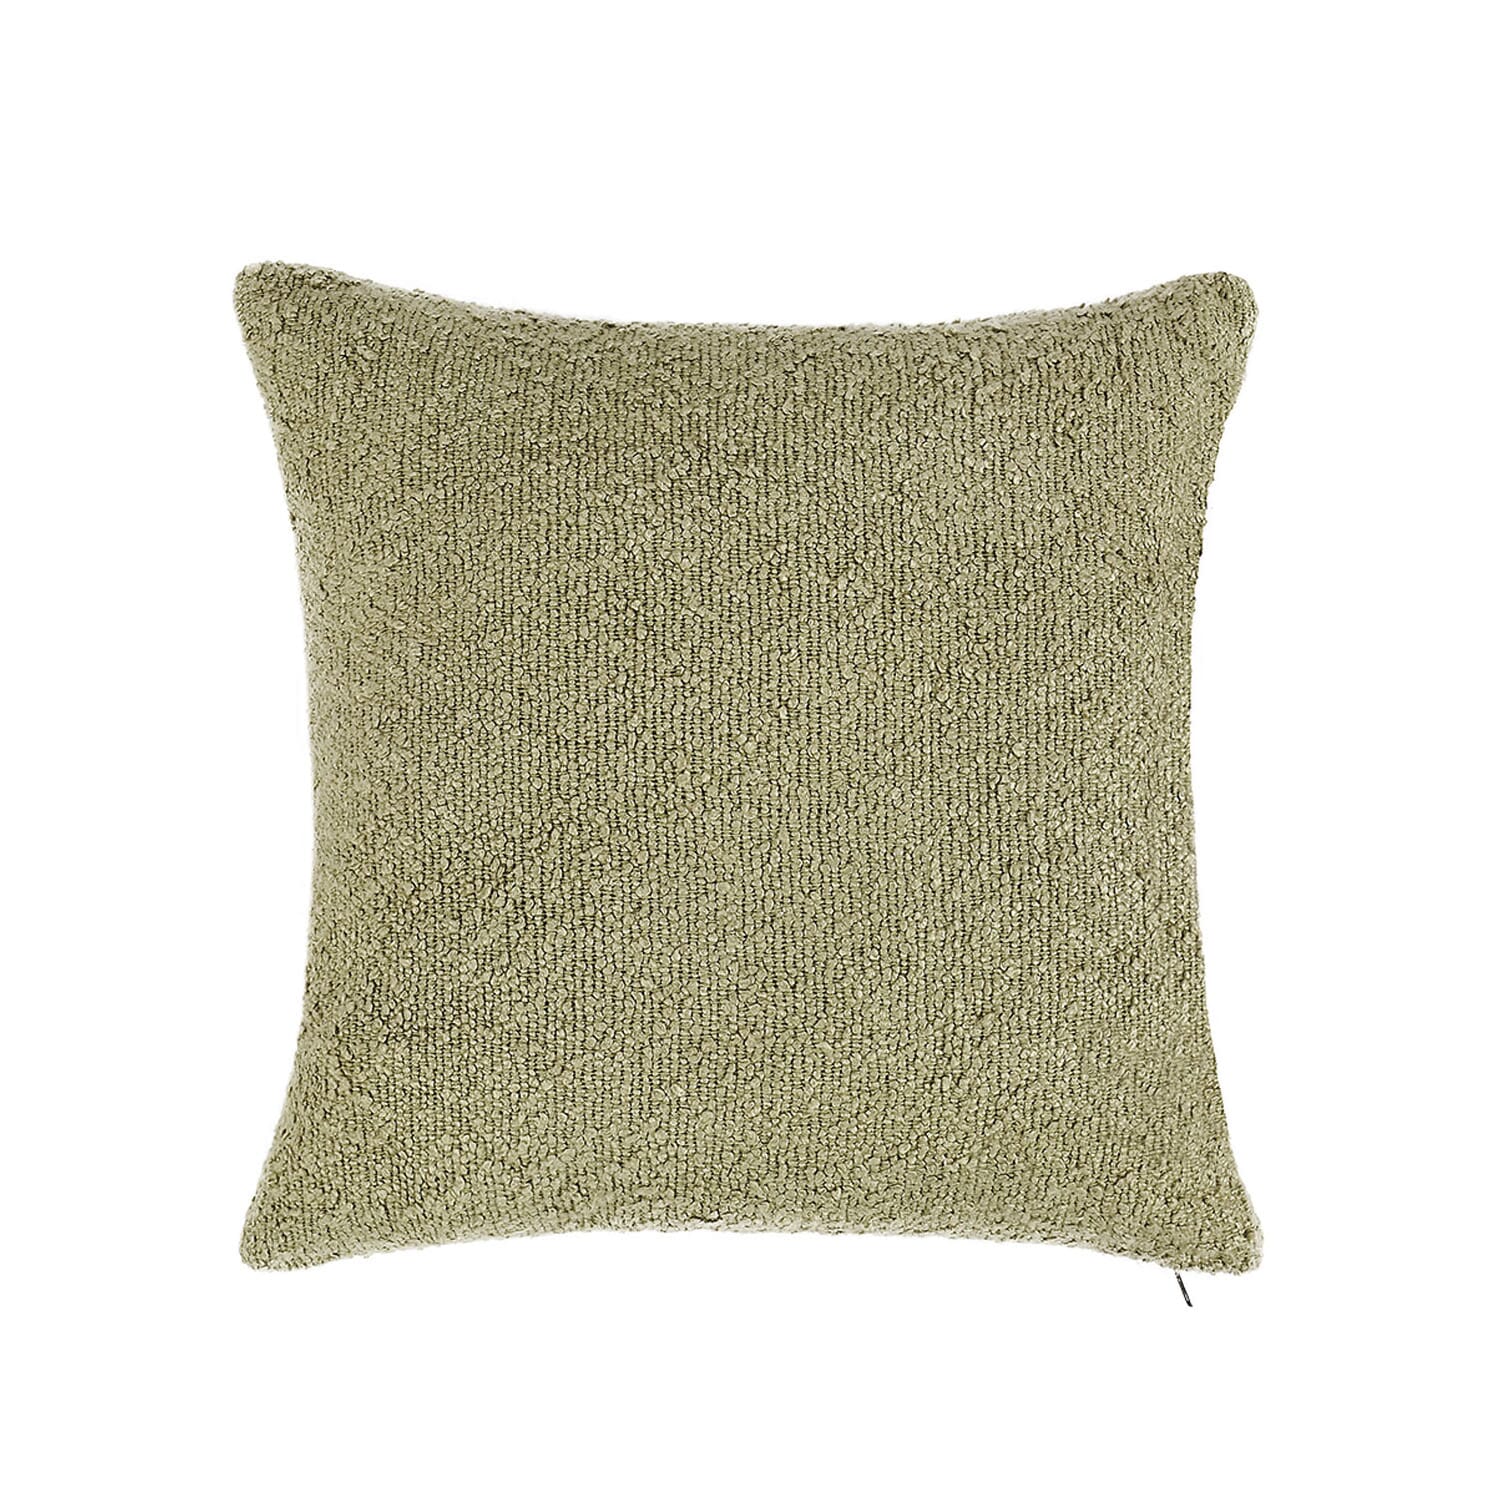 Sava Wheat Green 22x22 Pillow